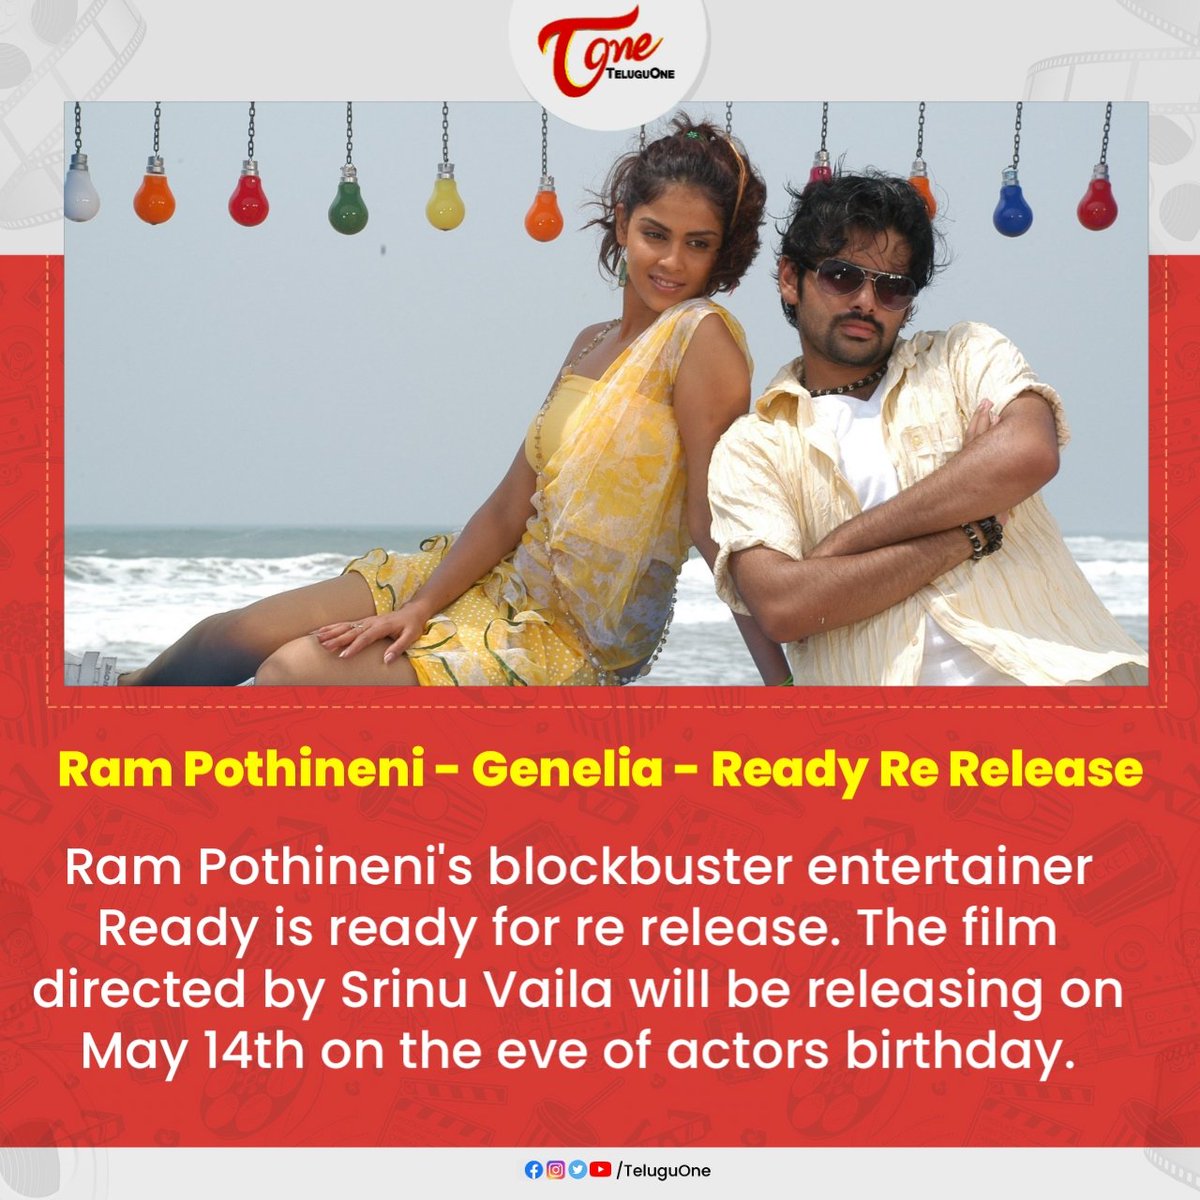 #Ready Re-release on May 14th. 

#RAmPOthineni #Genelia #Srinuvaitla #geneliadsouza